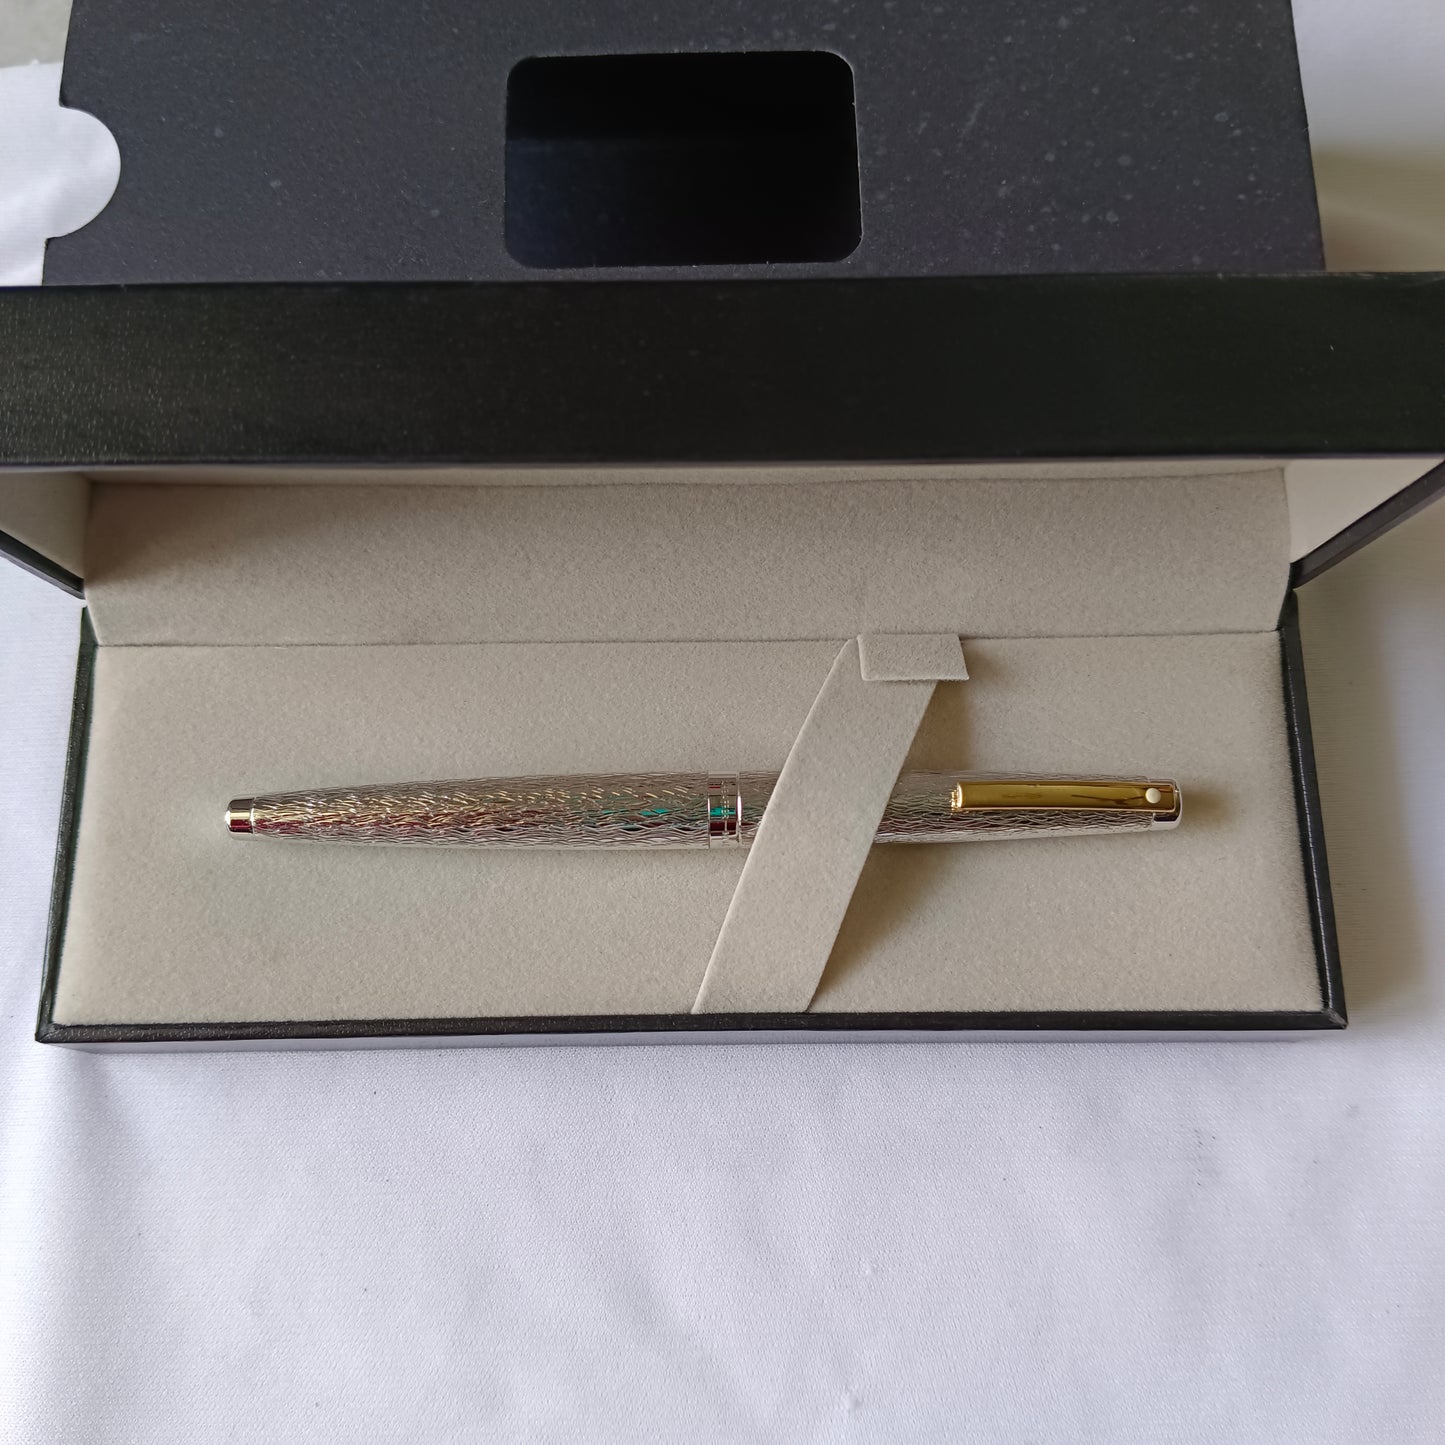 Vintage Sheaffer Lady Model No.925 Seaspray fountain pen 14K solid gold nib